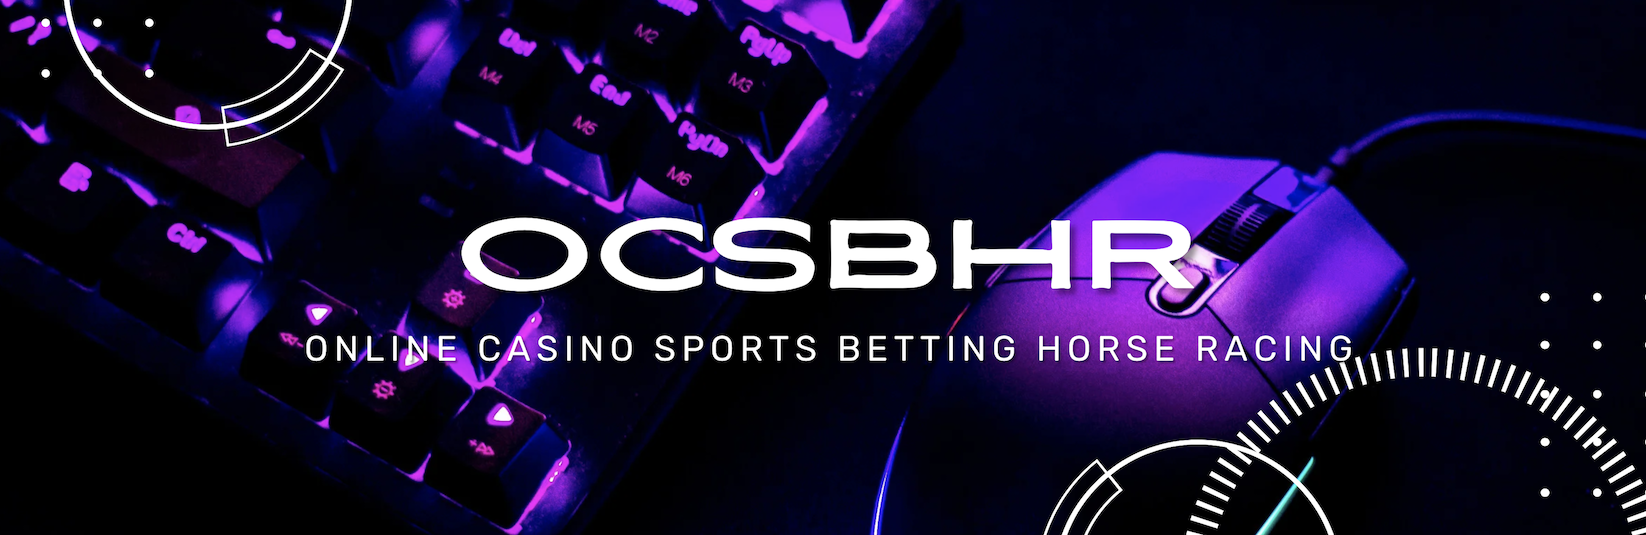 Horse Racing Online Casino Sports Betting